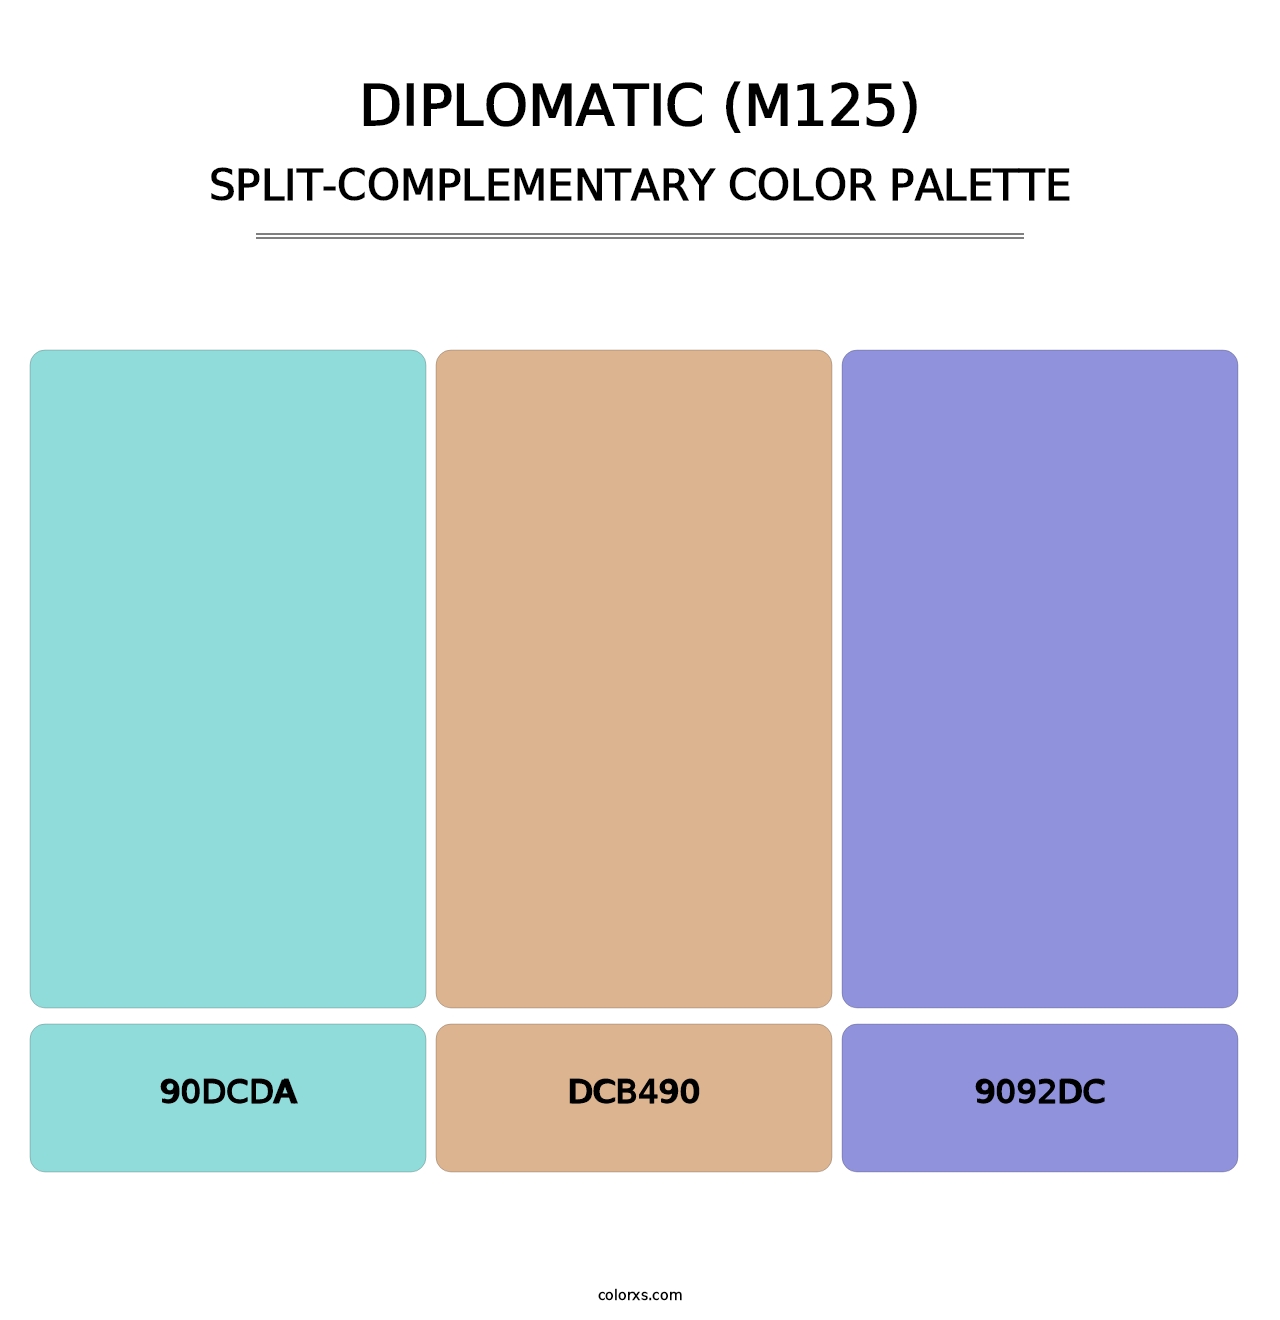 Diplomatic (M125) - Split-Complementary Color Palette